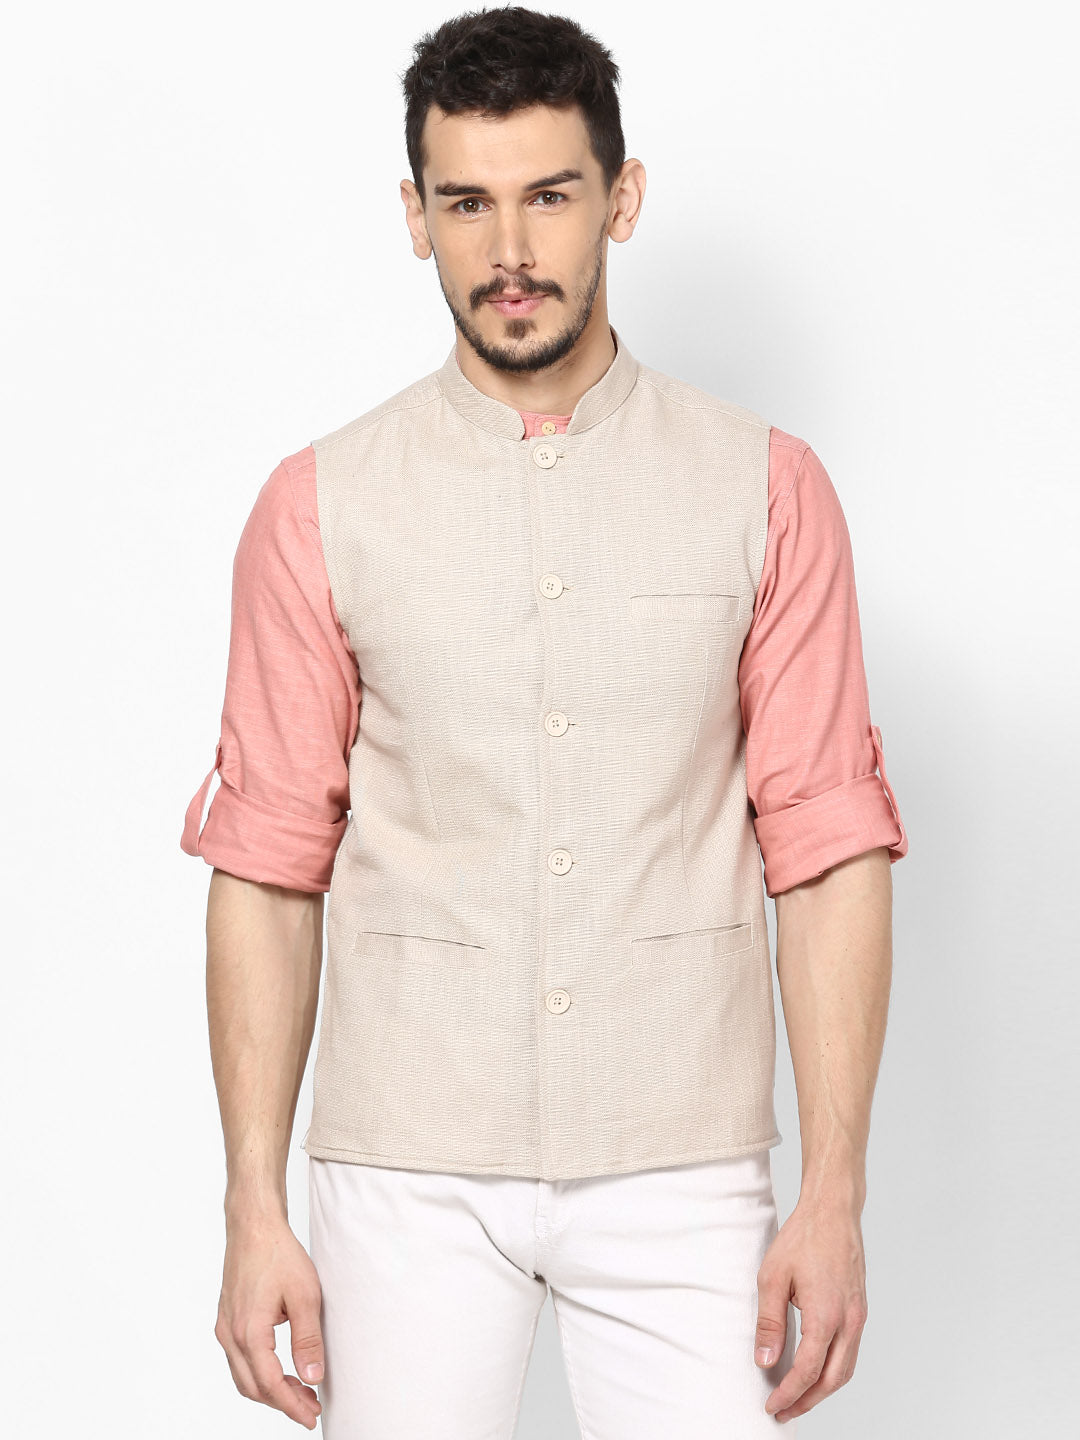 Men's Off White Linen Nehru Jacket - Even Apparels